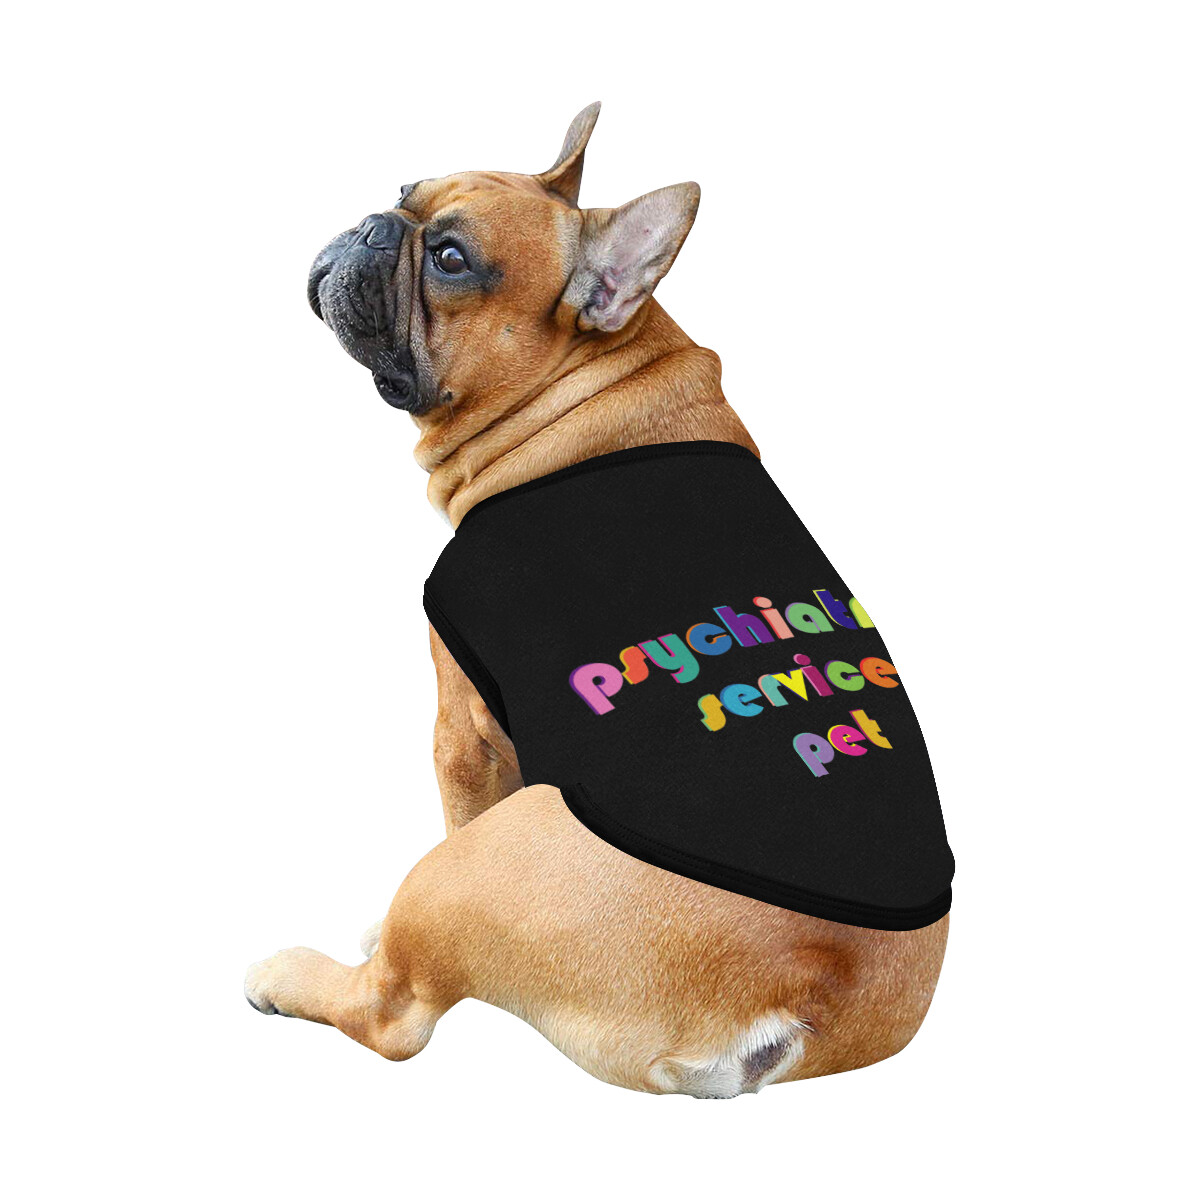 🐕 Psychiatric service pet Dog shirt, Dog Tank Top, Dog t-shirt, Dog clothes, Gifts, front back print, 7 sizes XS to 3XL, dog gifts, black